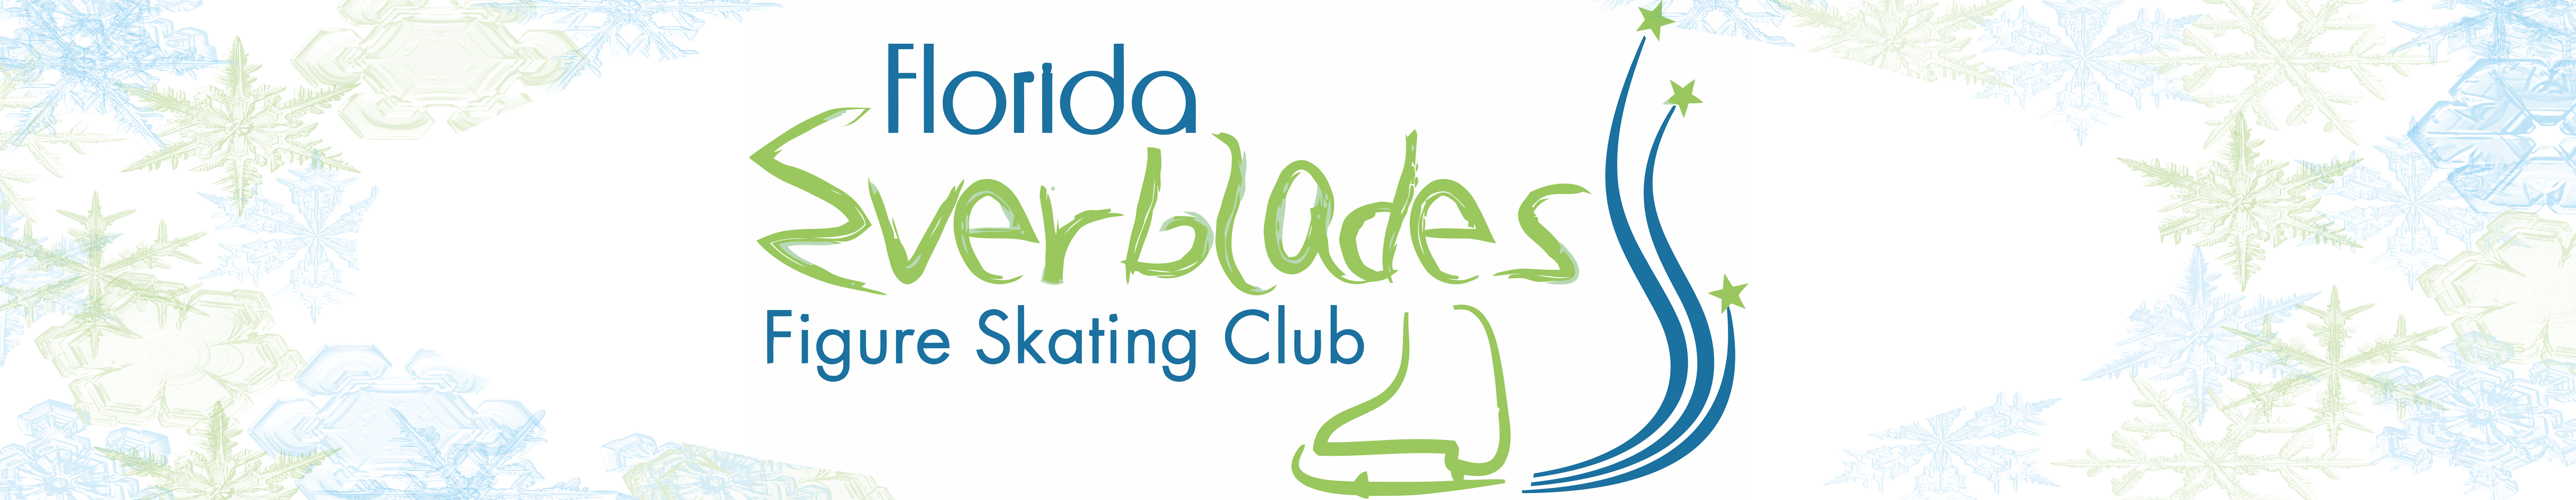 Florida Everblades Figure Skating Club